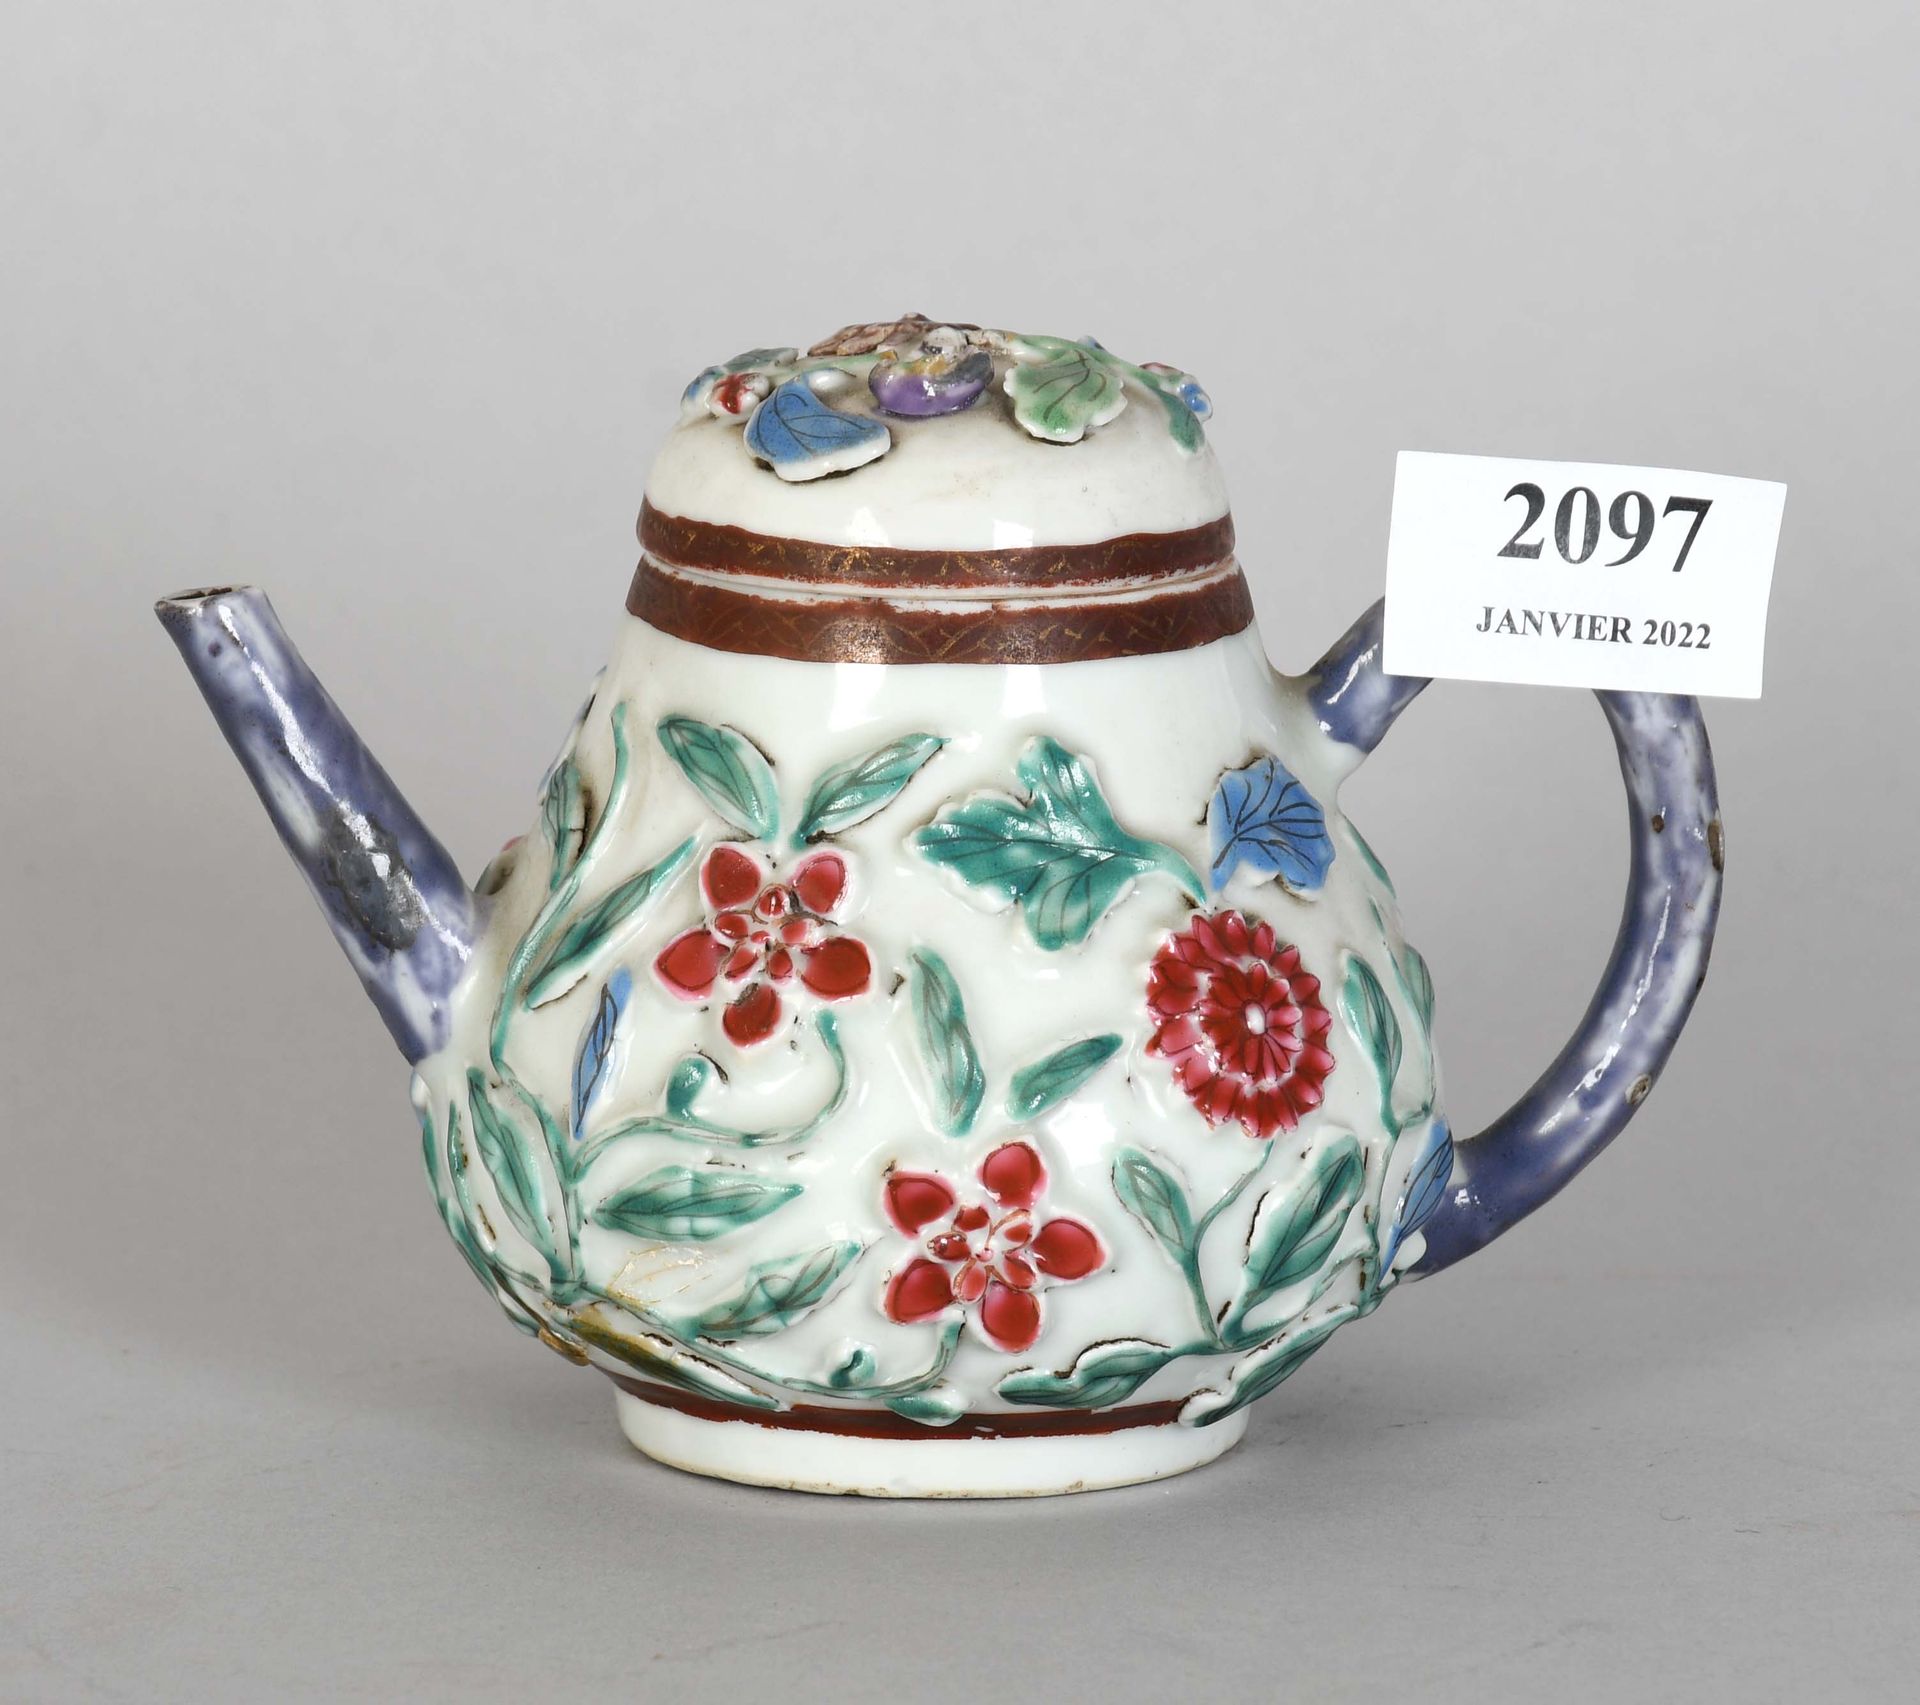 Null 中国

小型多色瓷茶壶，浮雕花卉装饰。Fretel受损。头发。

高度：11厘米。